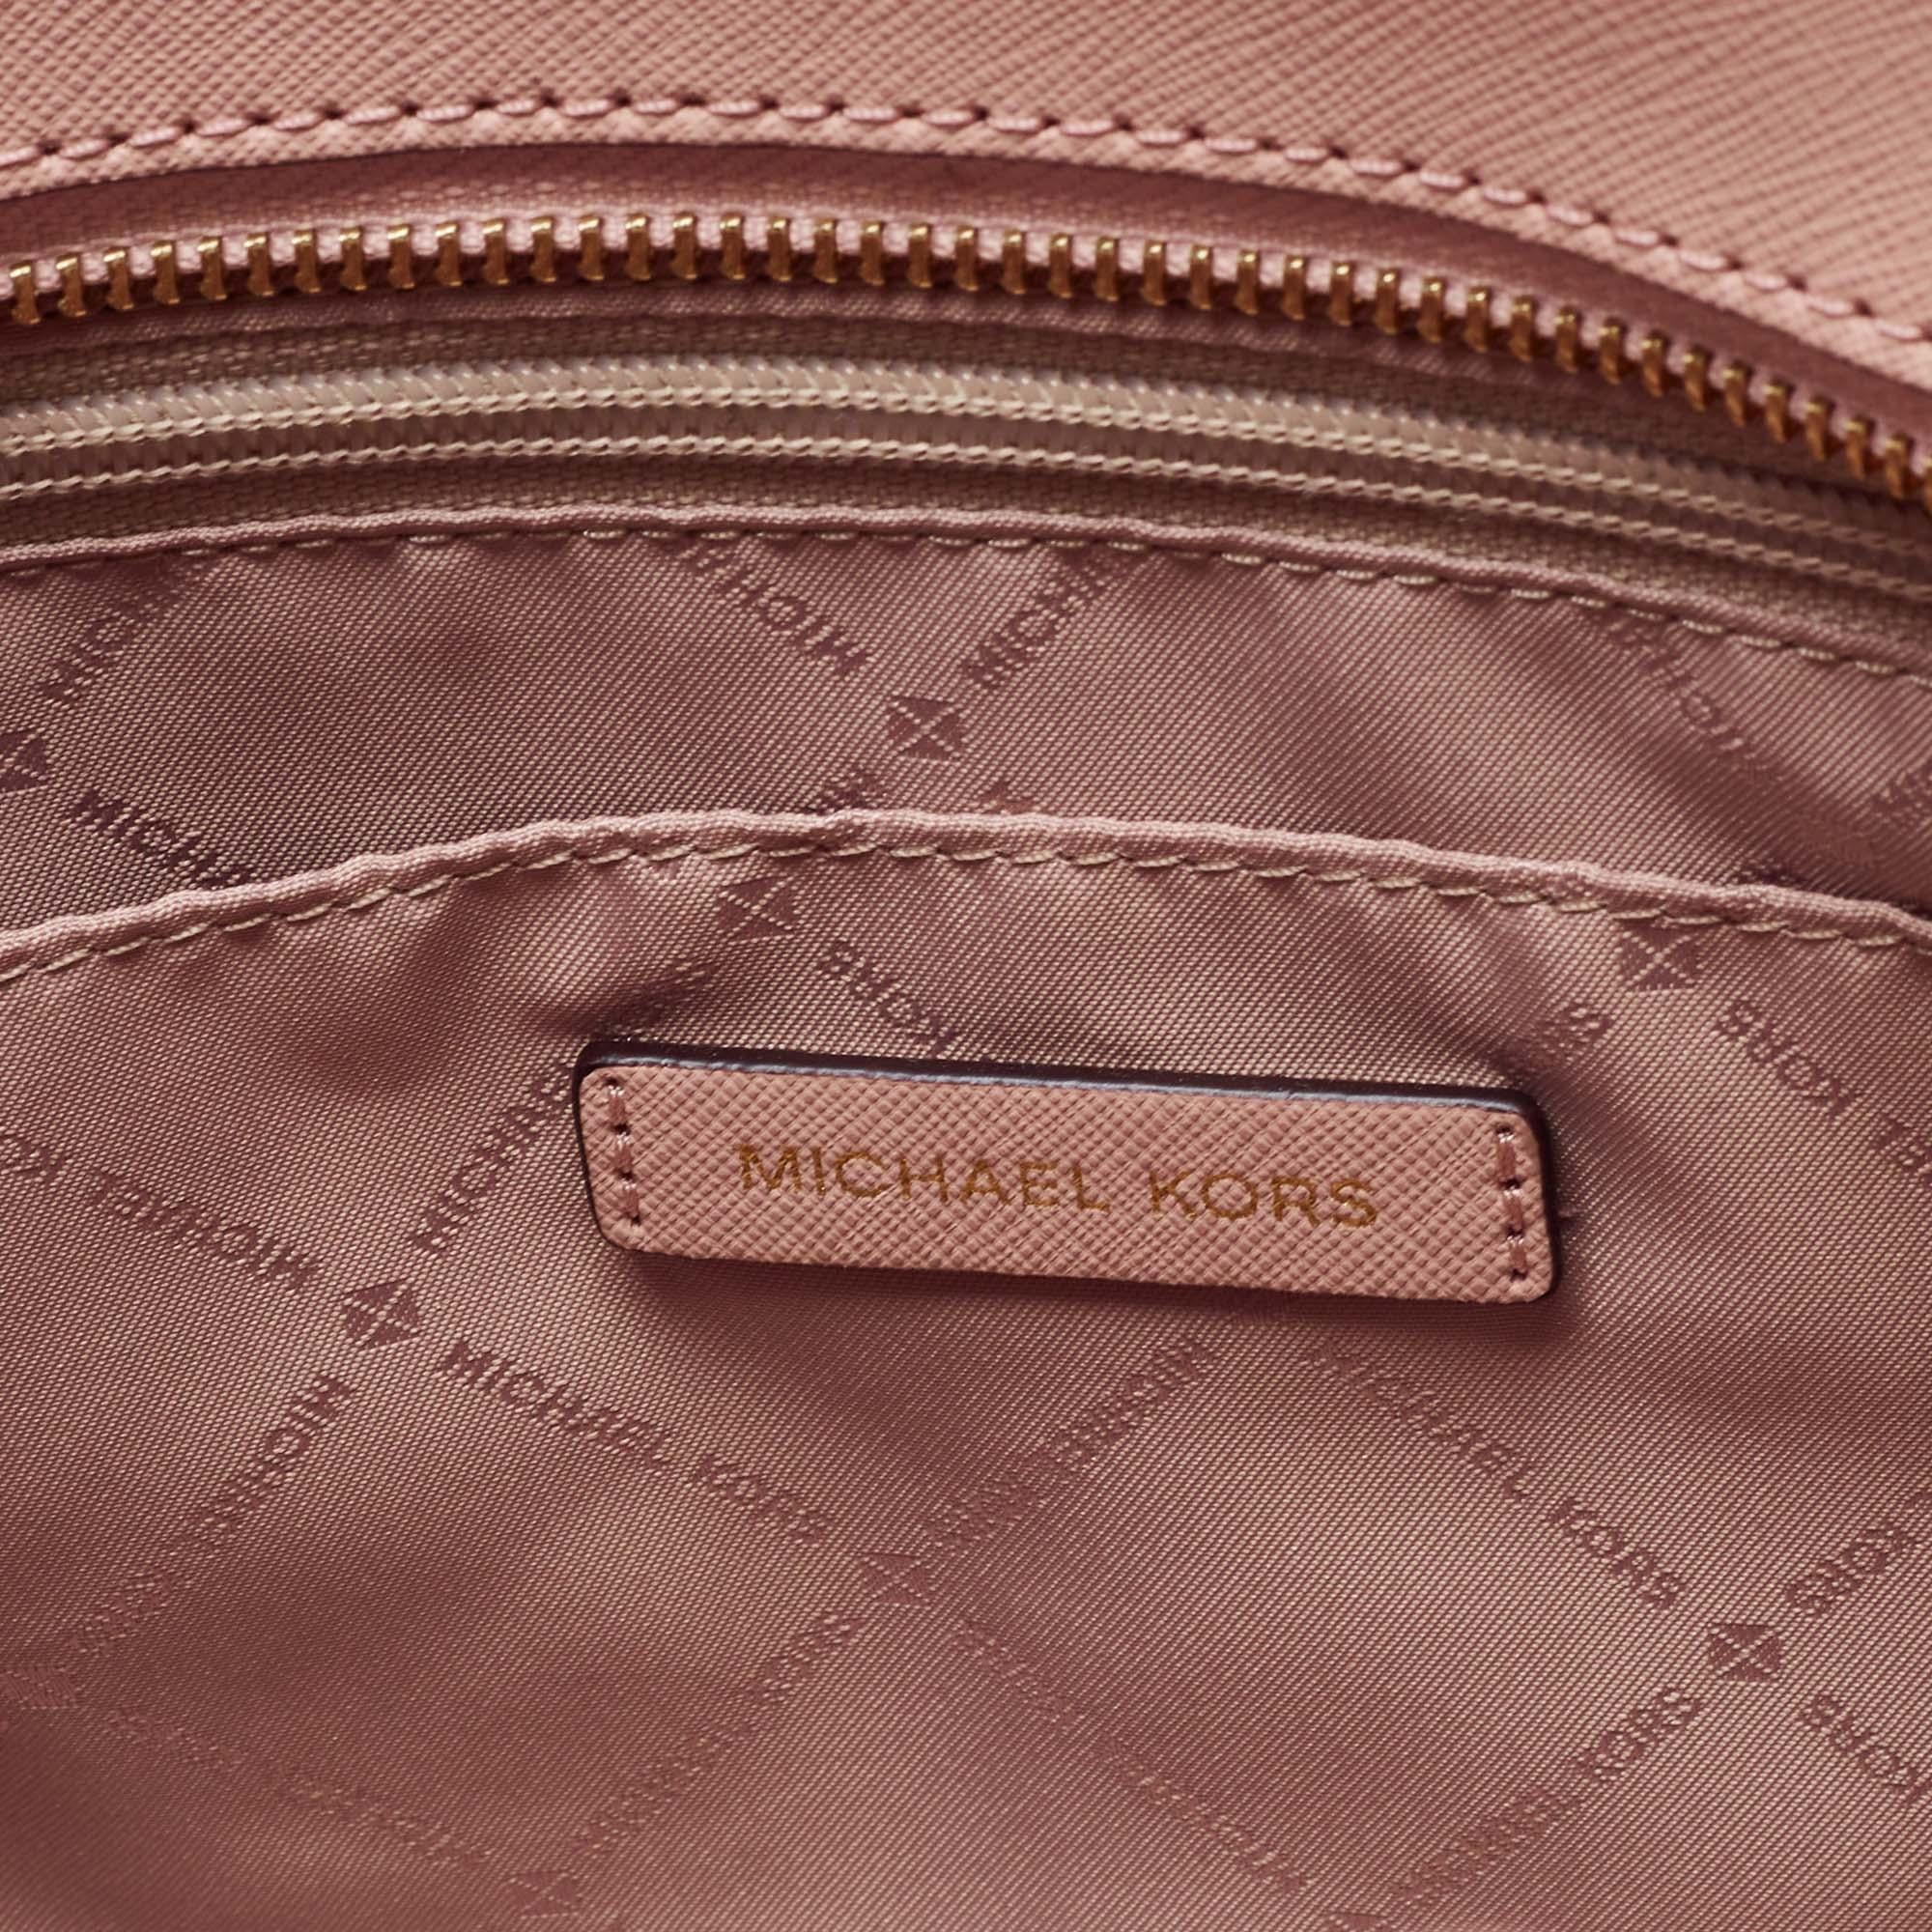 Women's Michael Kors Pink Saffiano Leather Jet Set Travel Chain Tote